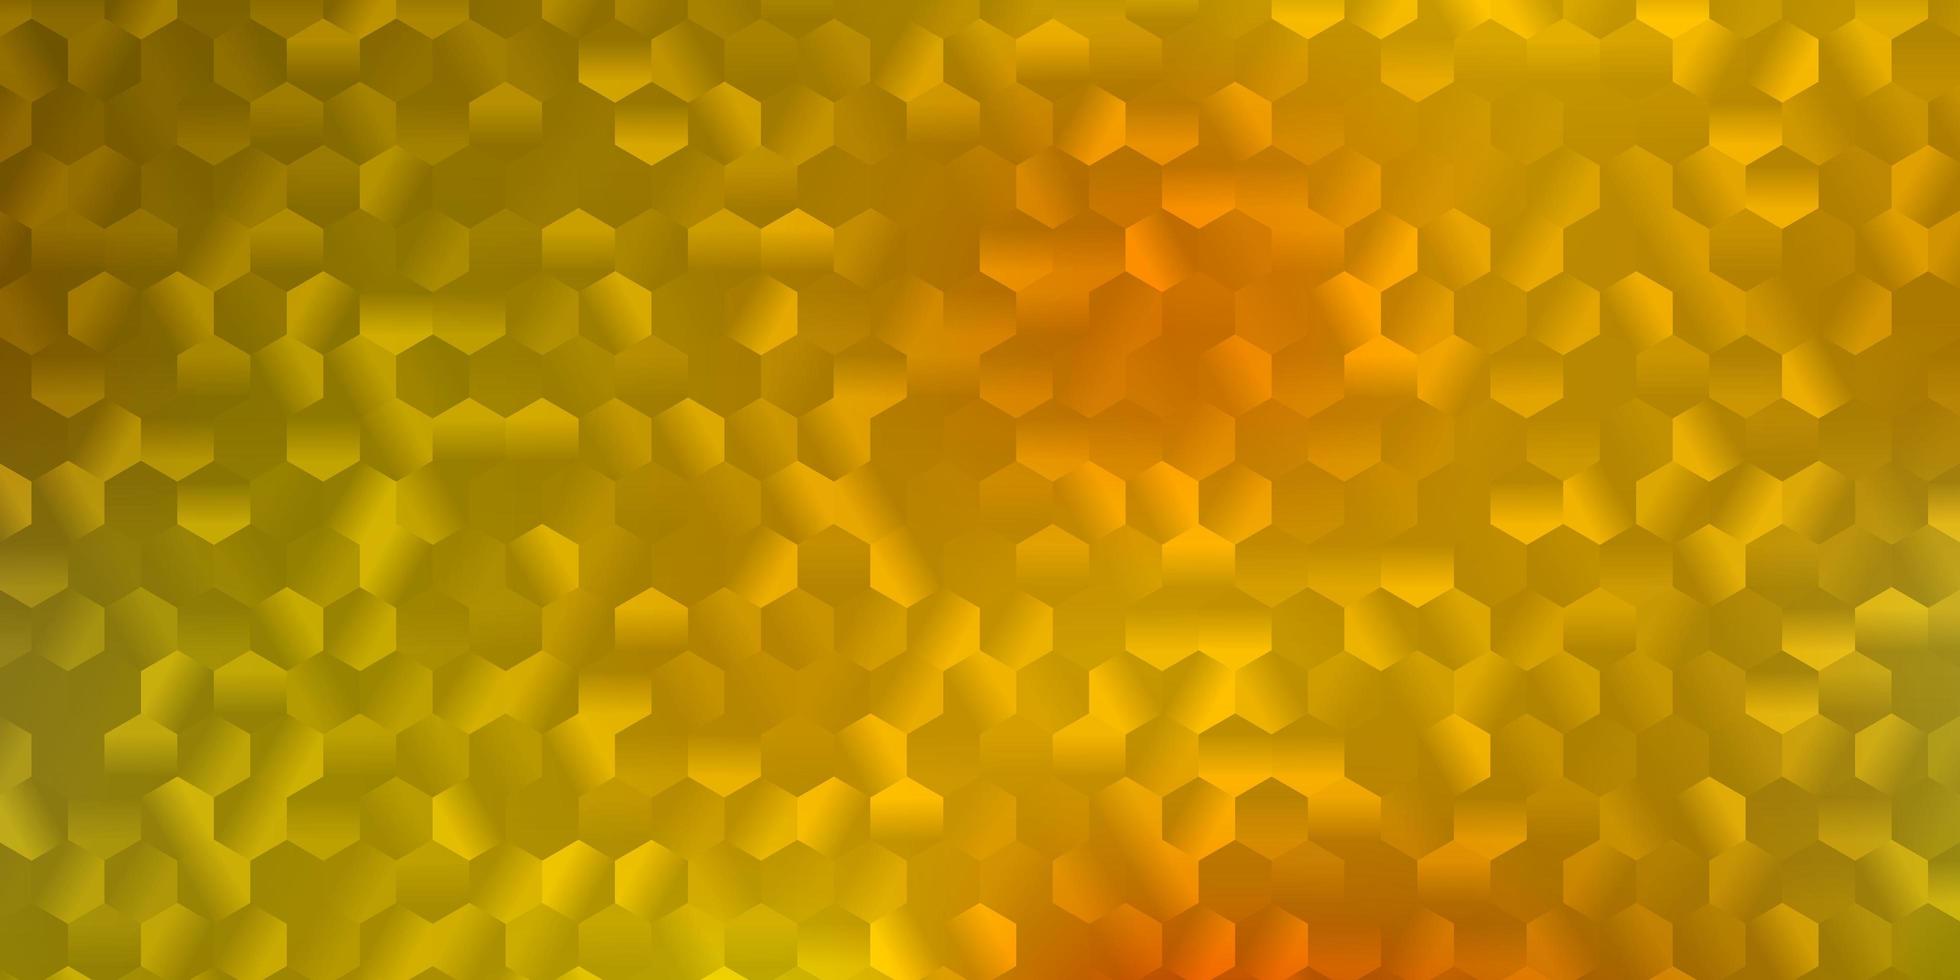 modelo de vetor laranja claro com formas abstratas.